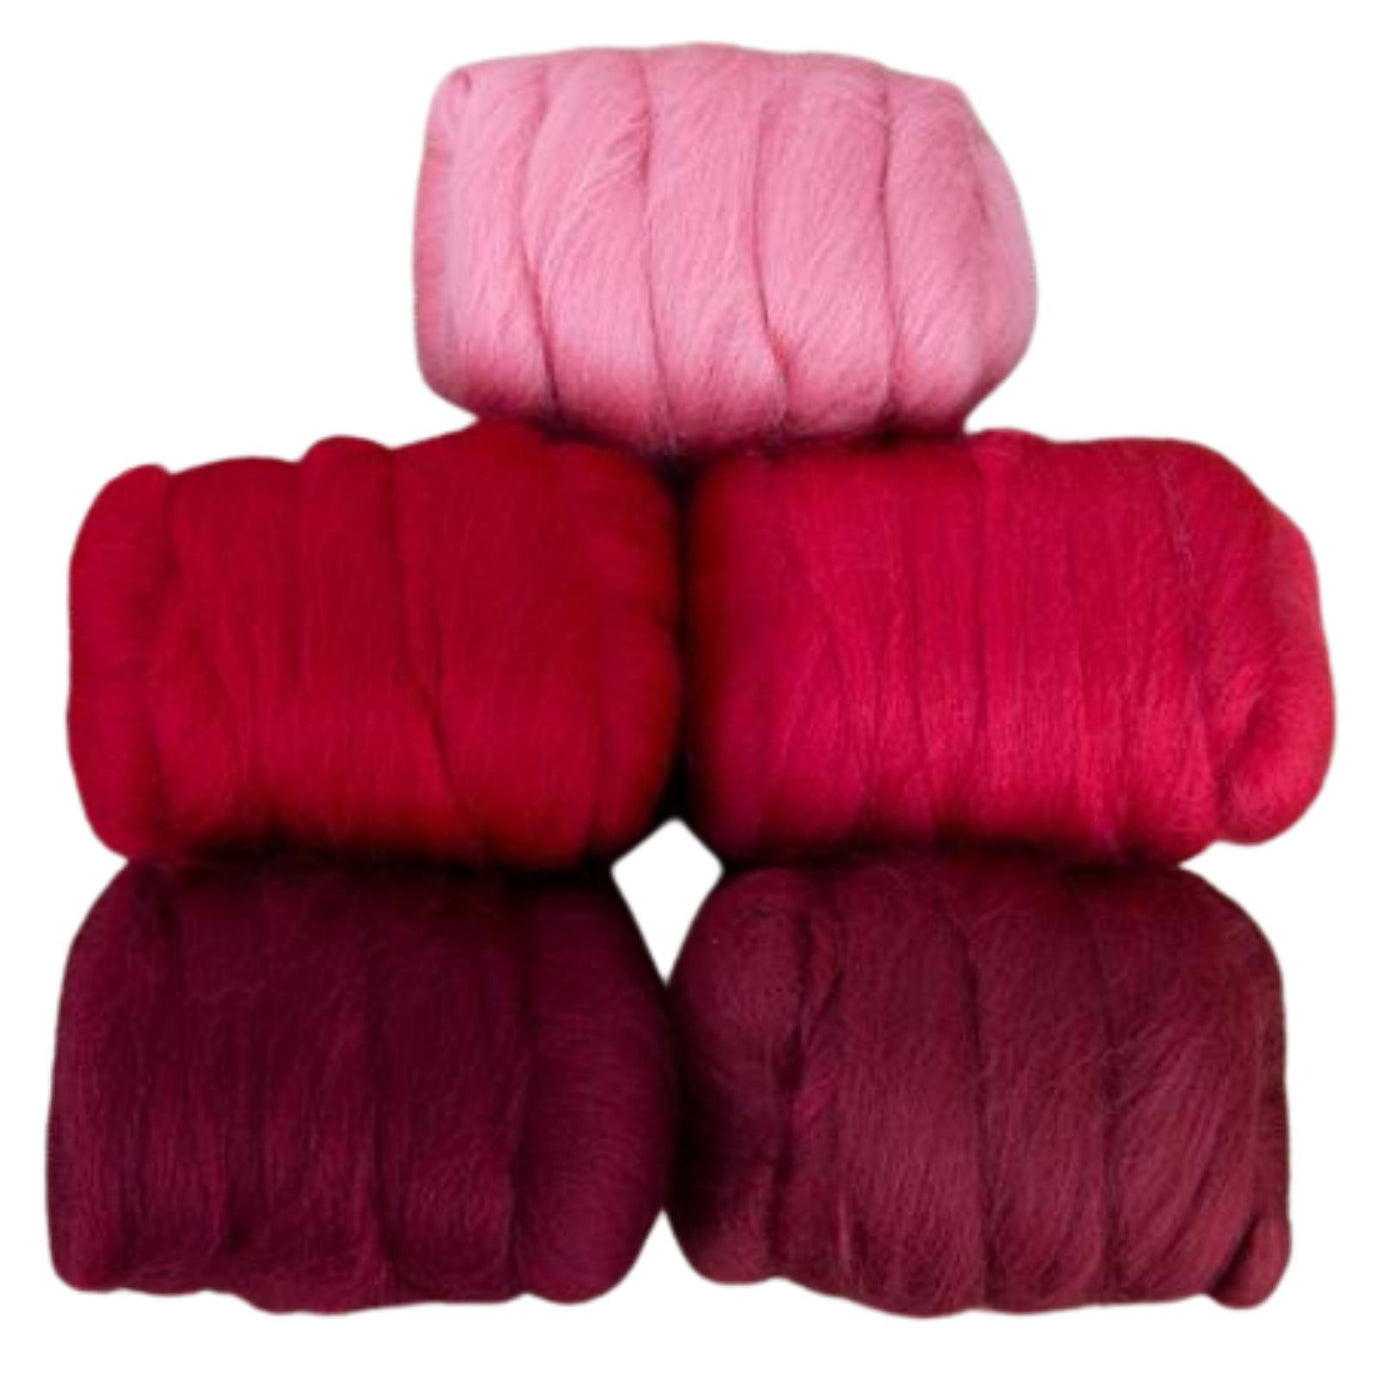 Mixed Merino Wool Variety Pack | Wondrous Reds (Reds) 250 Grams, 23 Micron-Wool Roving-Revolution Fibers-Revolution Fibers